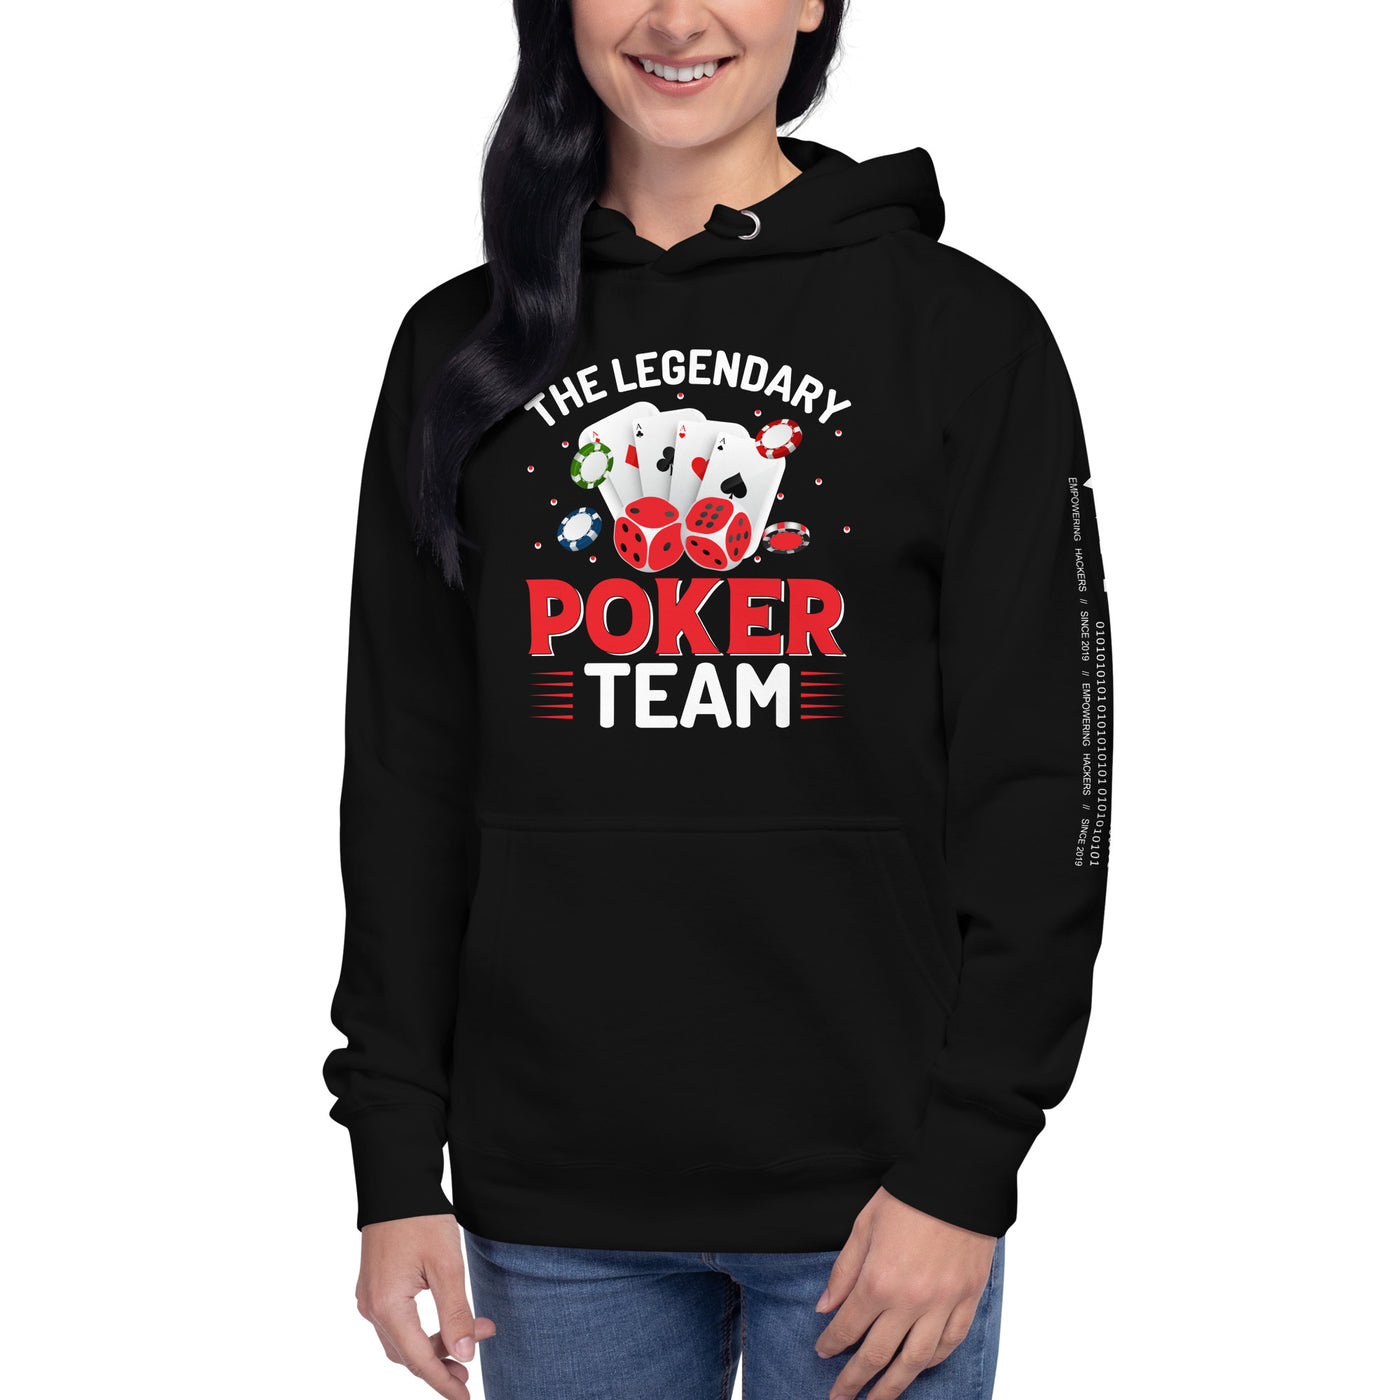 The Legendary Poker Team - Unisex Hoodie